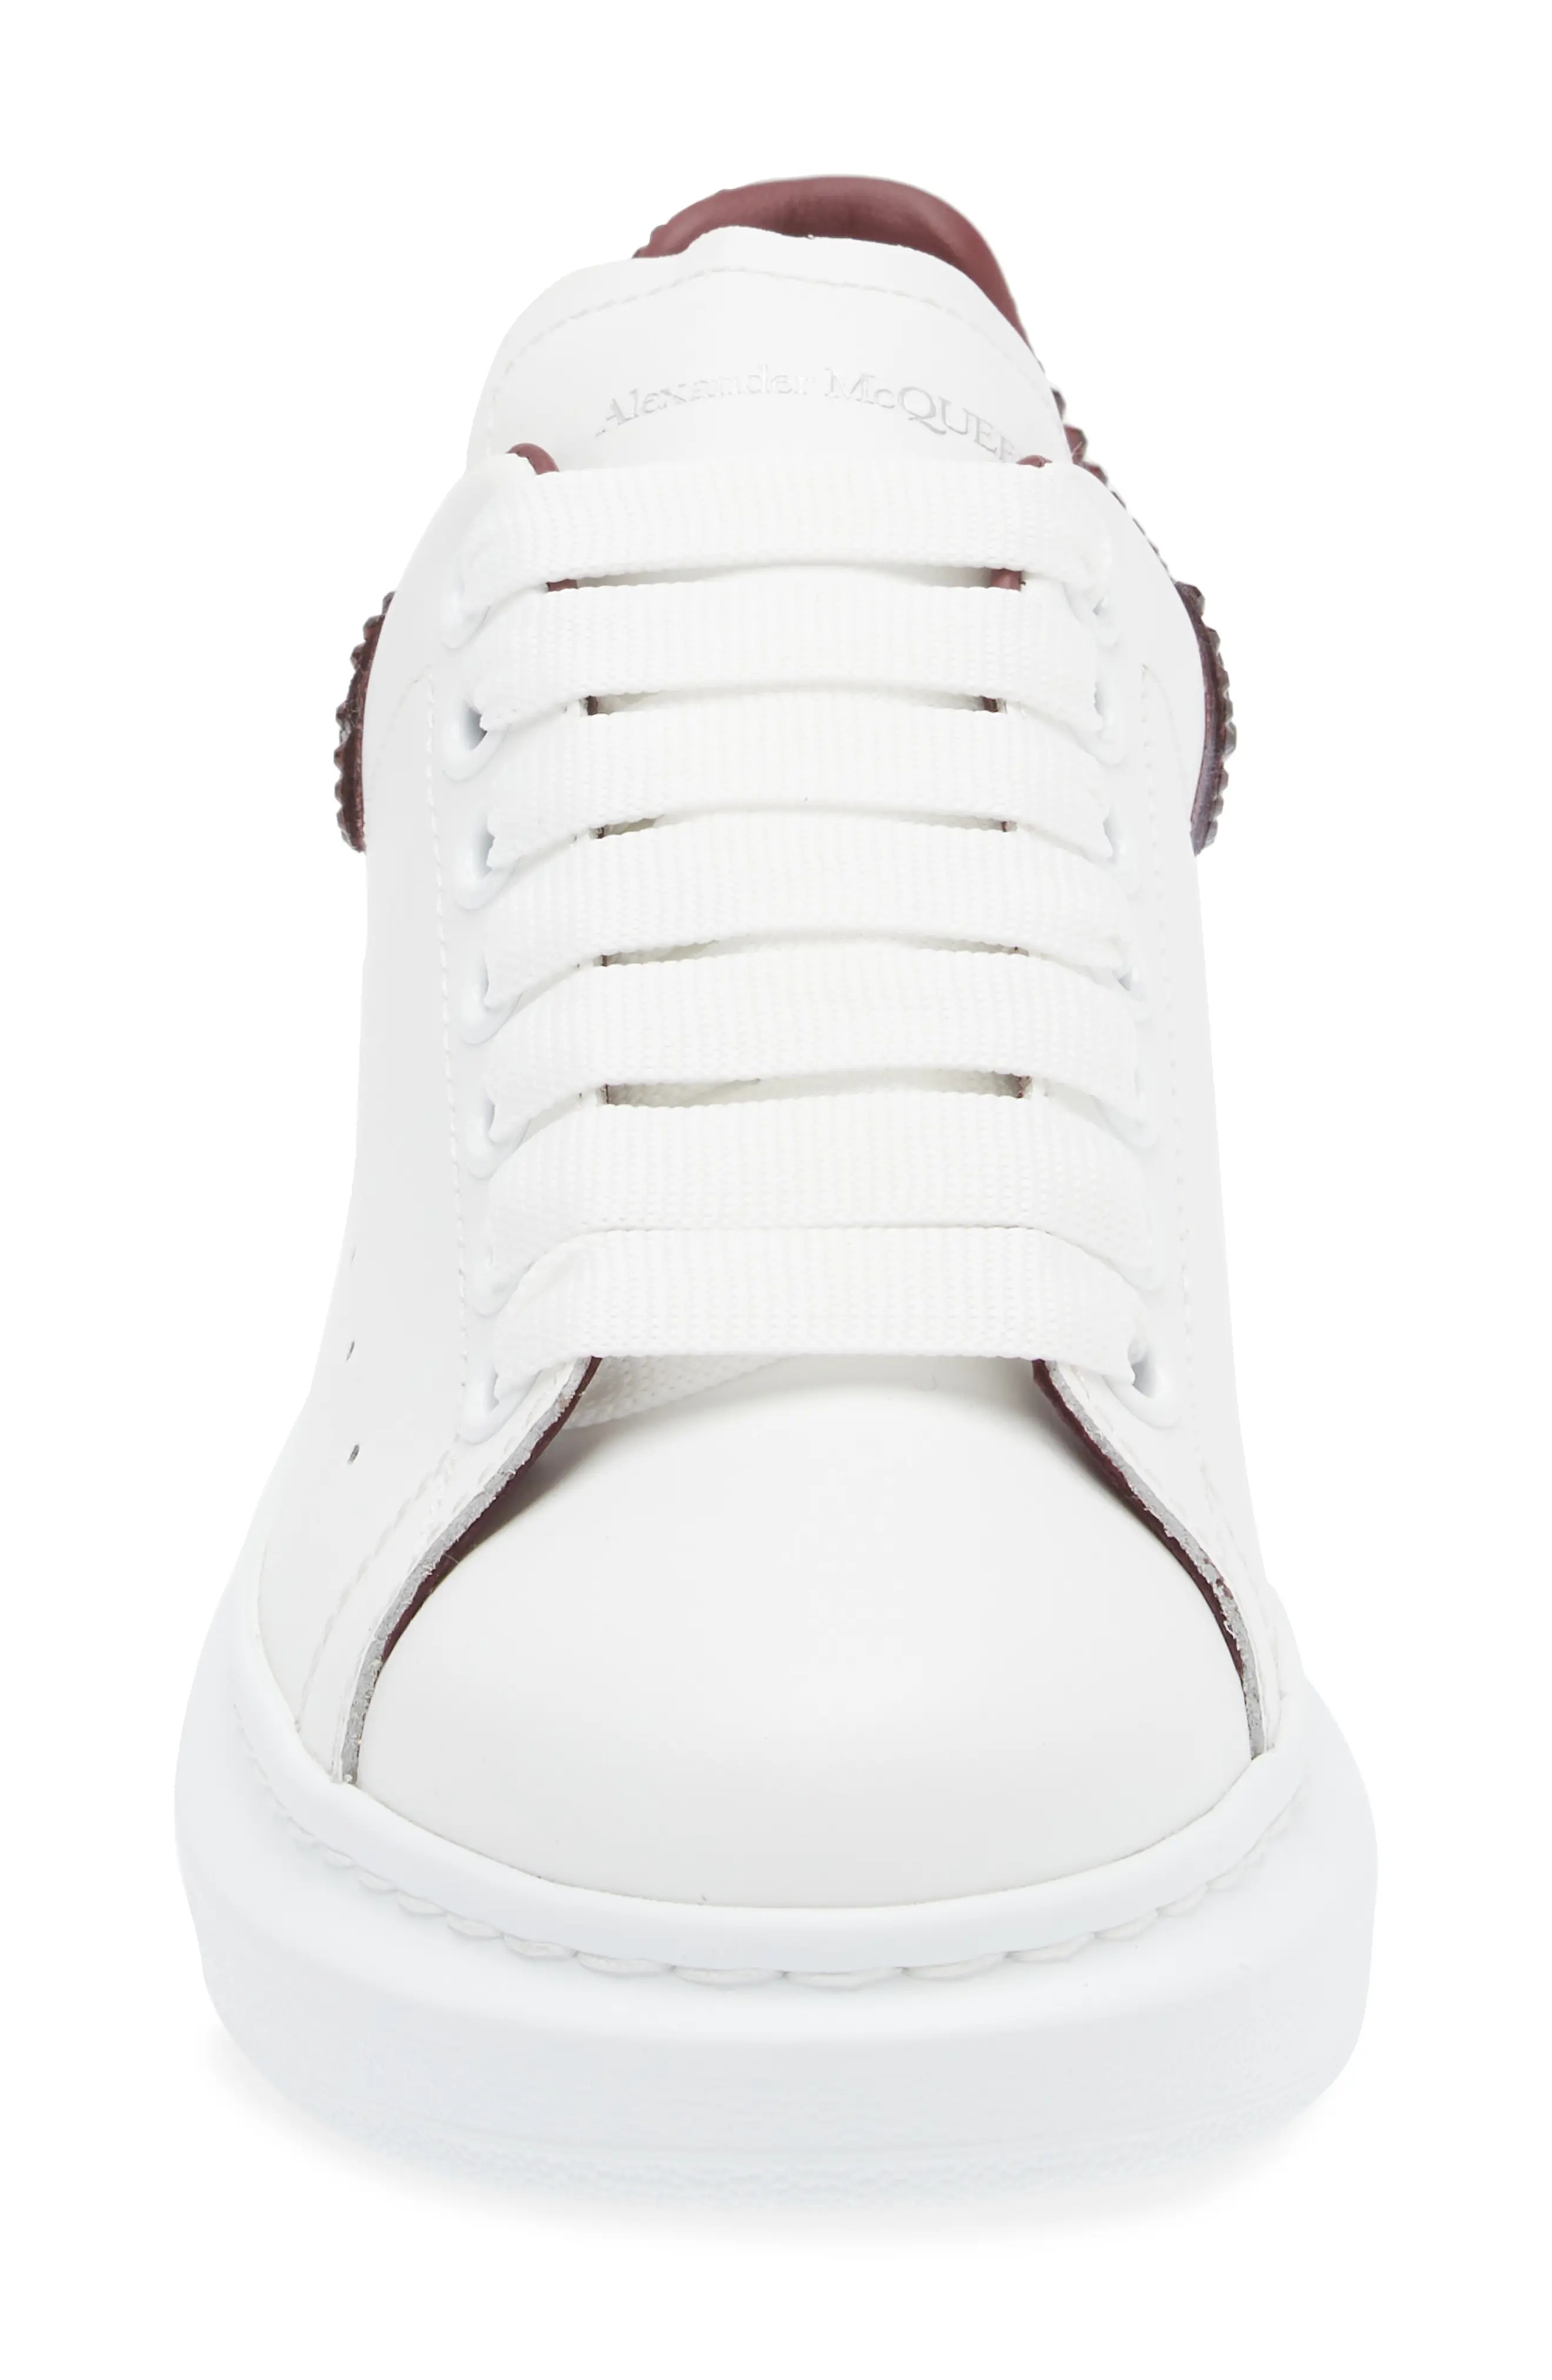 Oversized Crystal Embellished Sneaker in White/Burgundy - 4